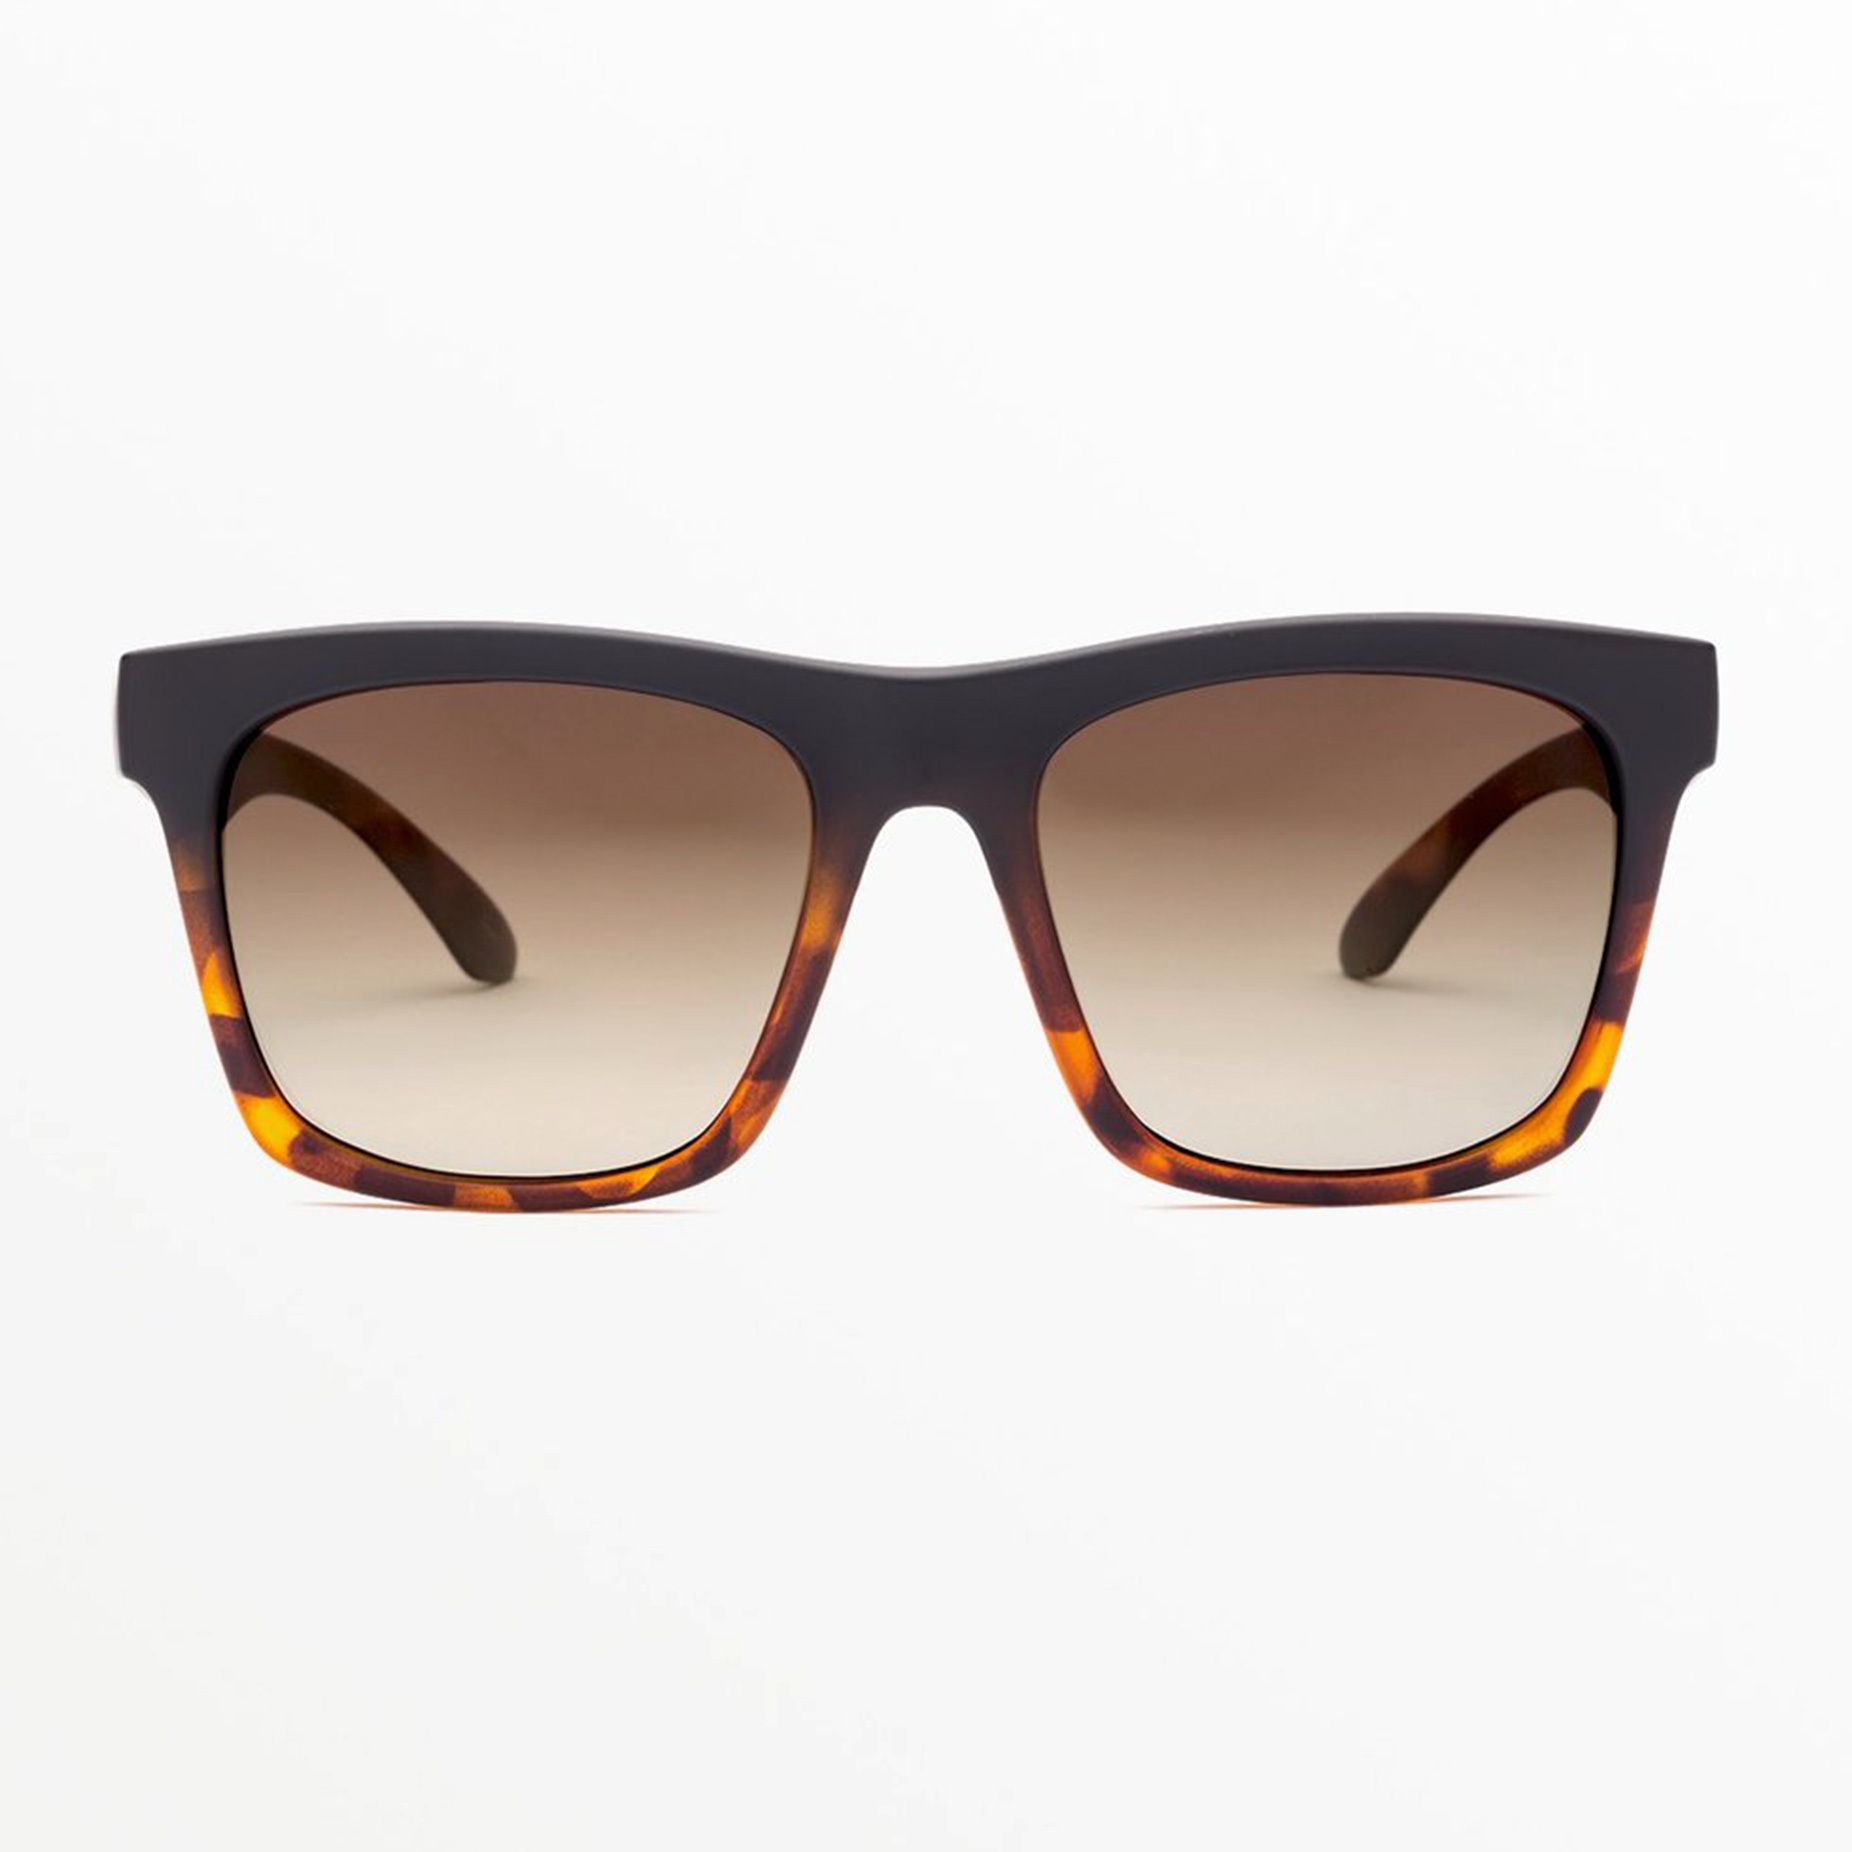 Electric FADE Sunglasses Matte White - OHM + Orange Lenses - Made in Italy  | eBay